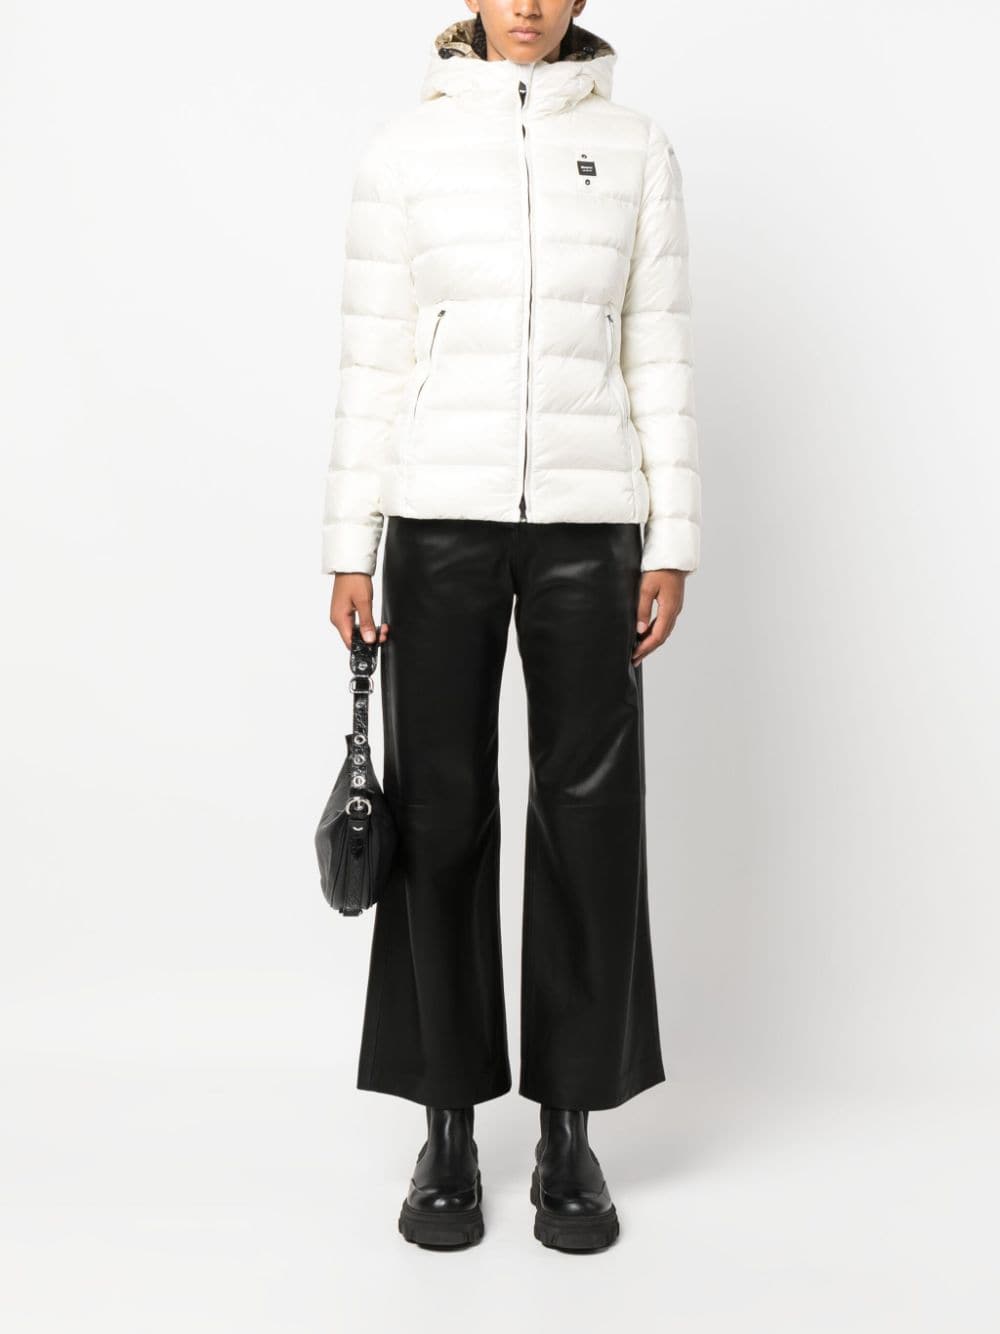 BLAUER: jacket for woman - White  Blauer jacket 23WBLDC03148005050 online  at